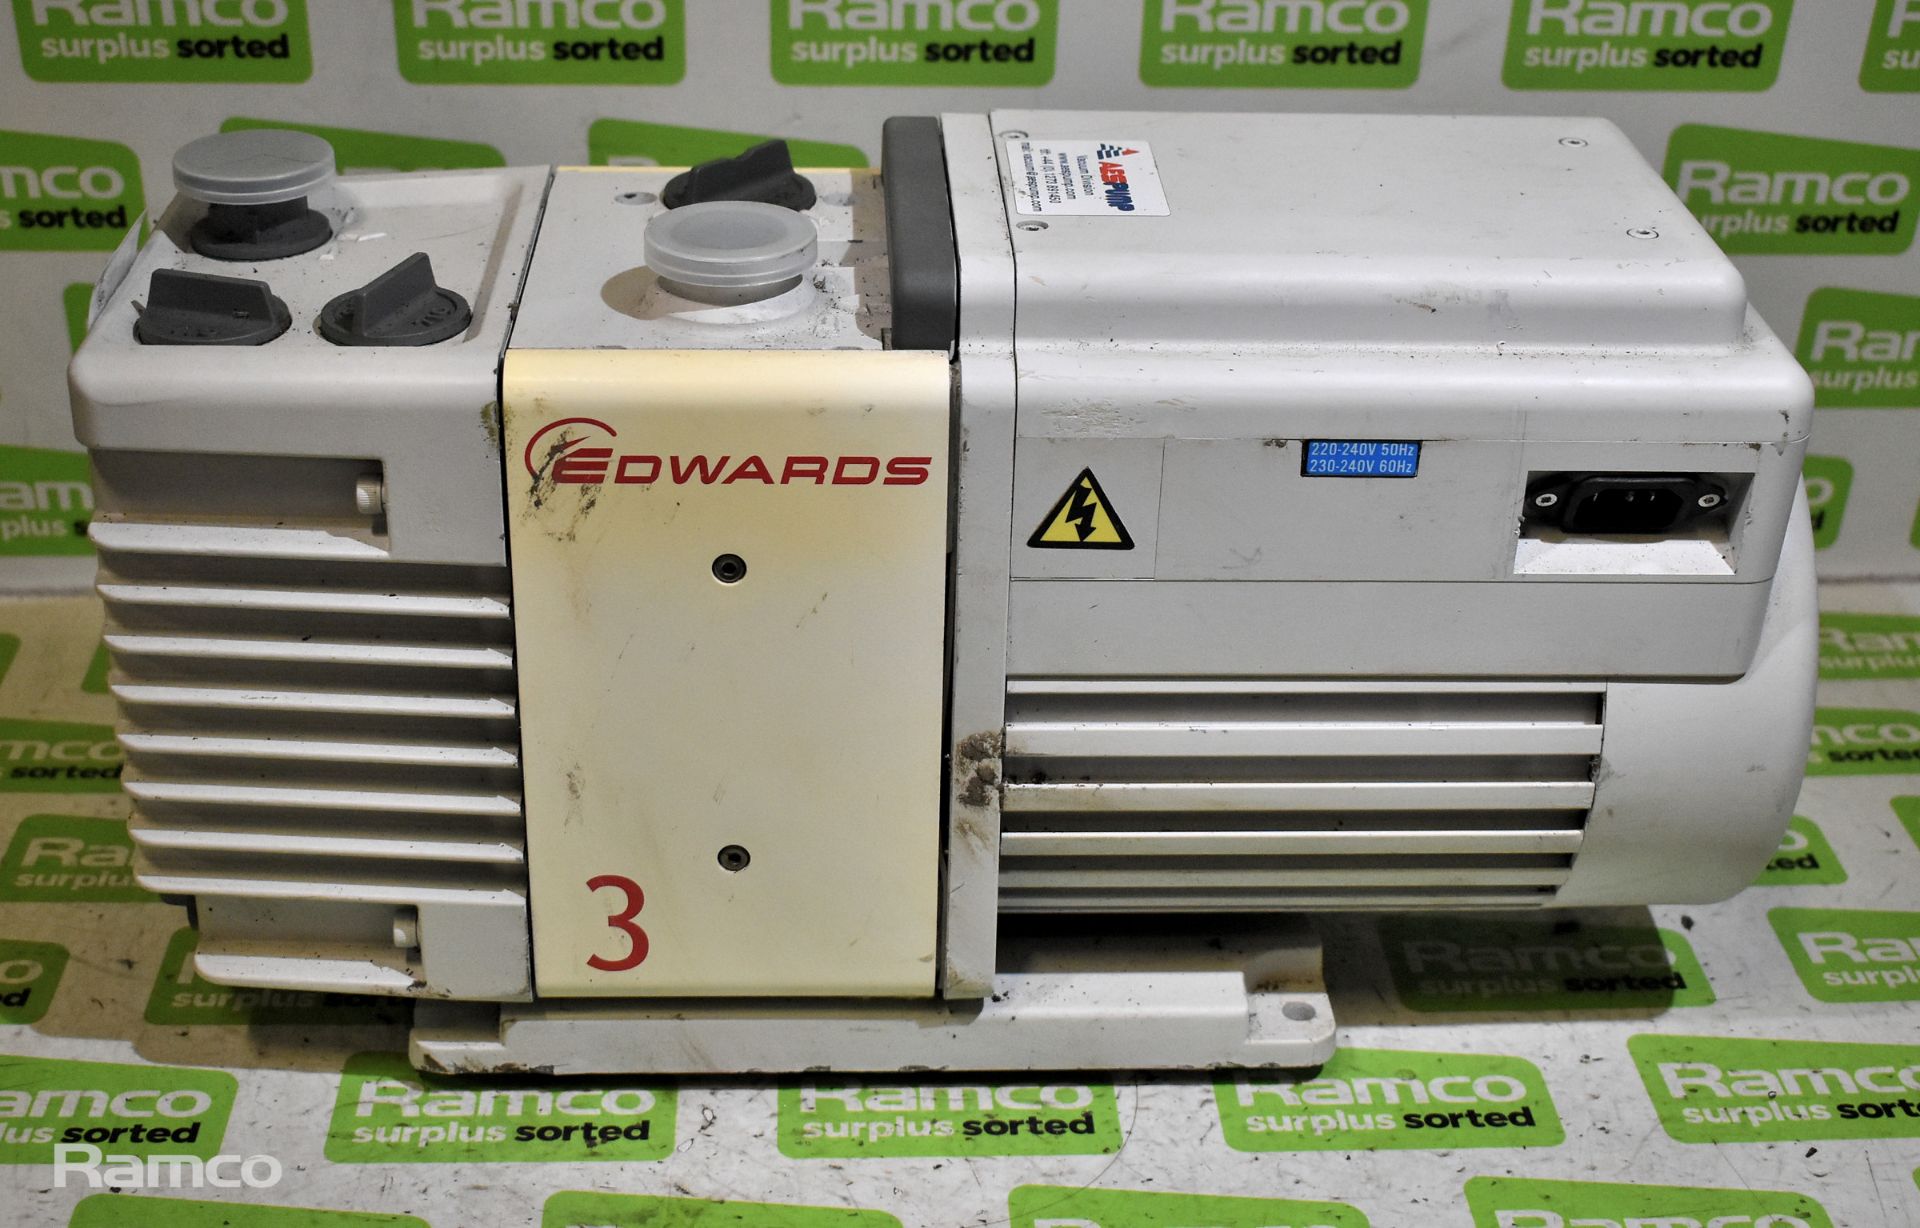 Edwards laboratory high vacuum pump - RV3